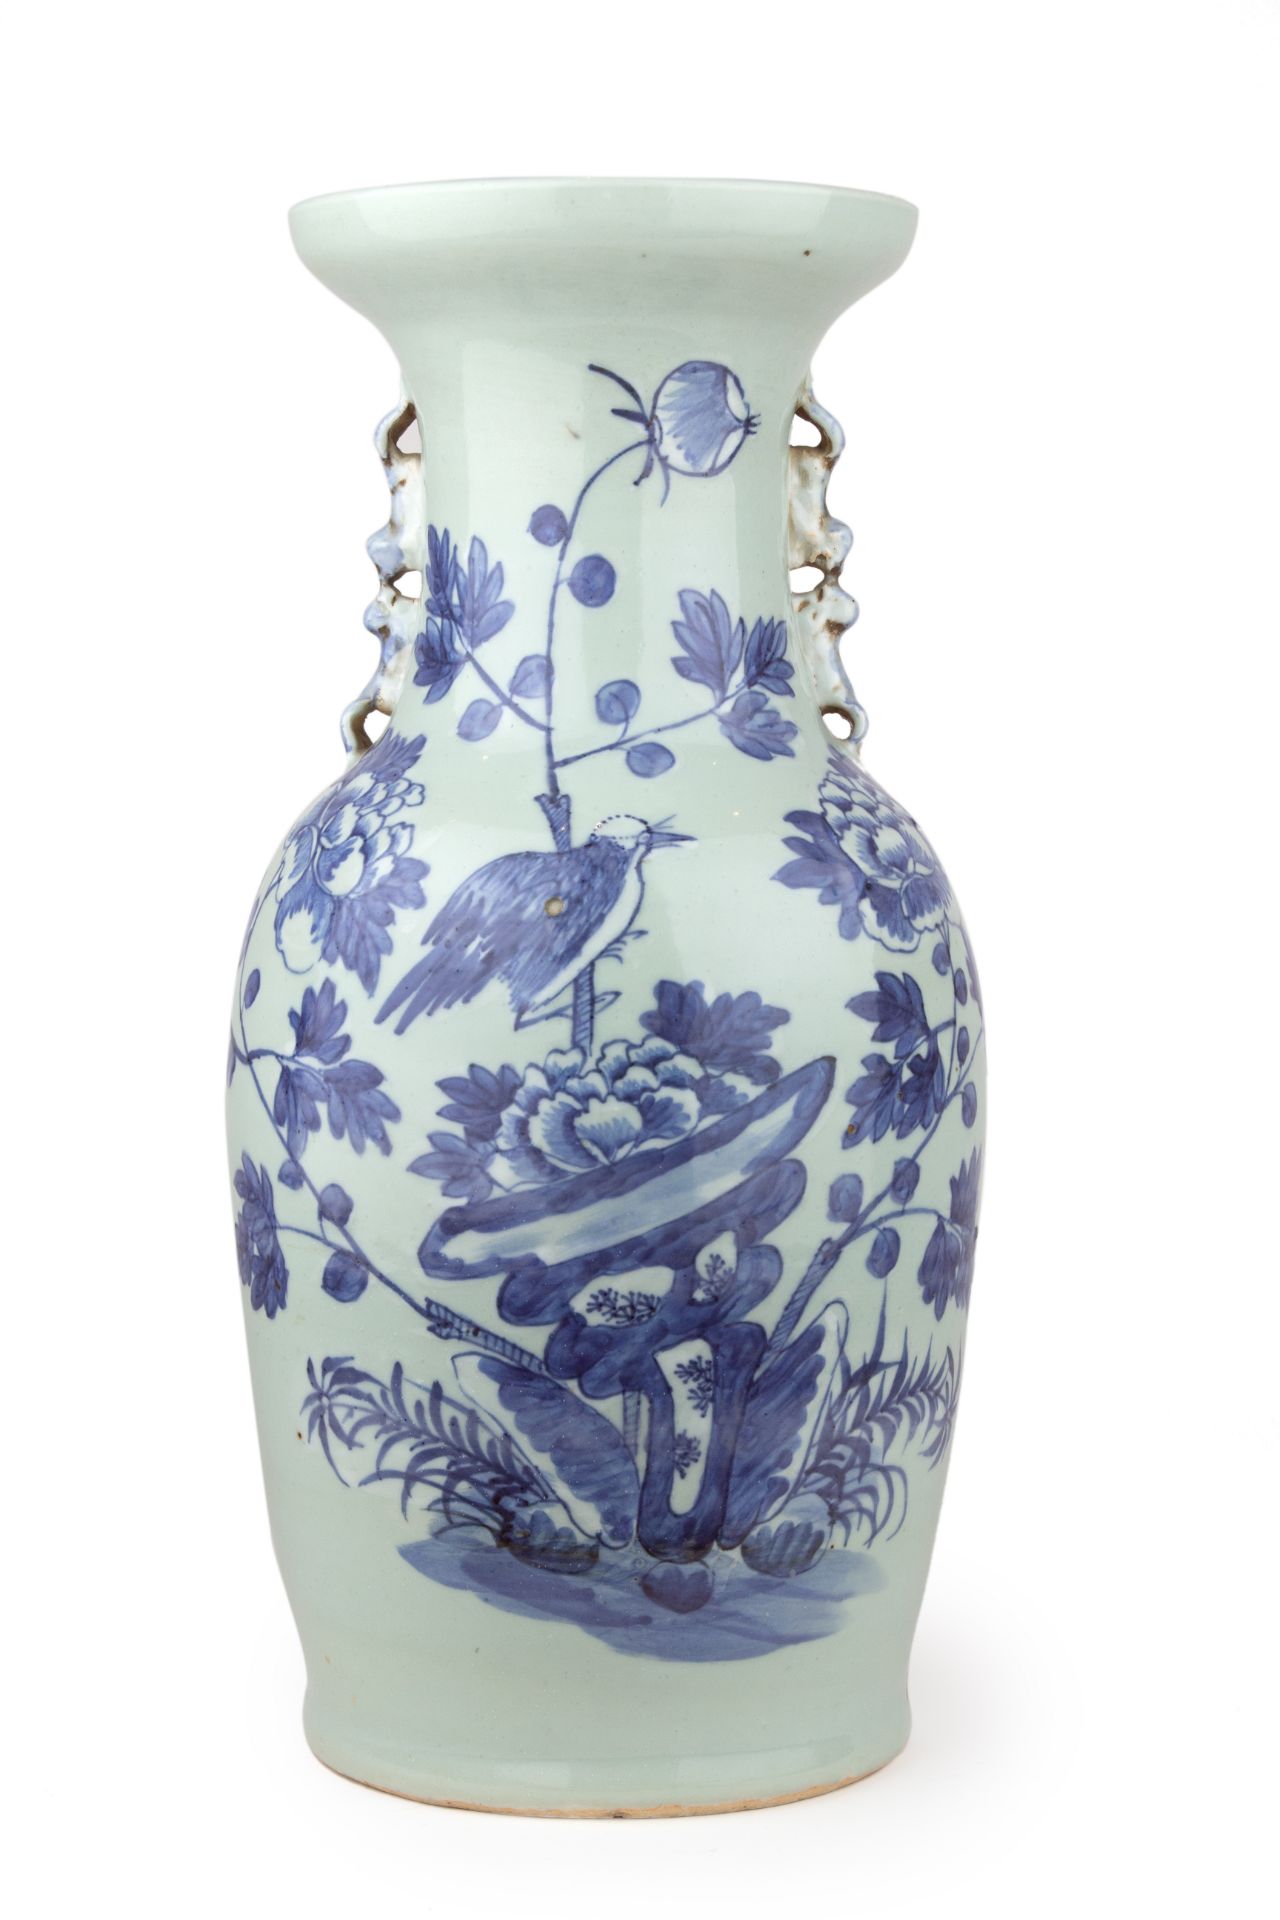 A 19th century Chinese celadon vase